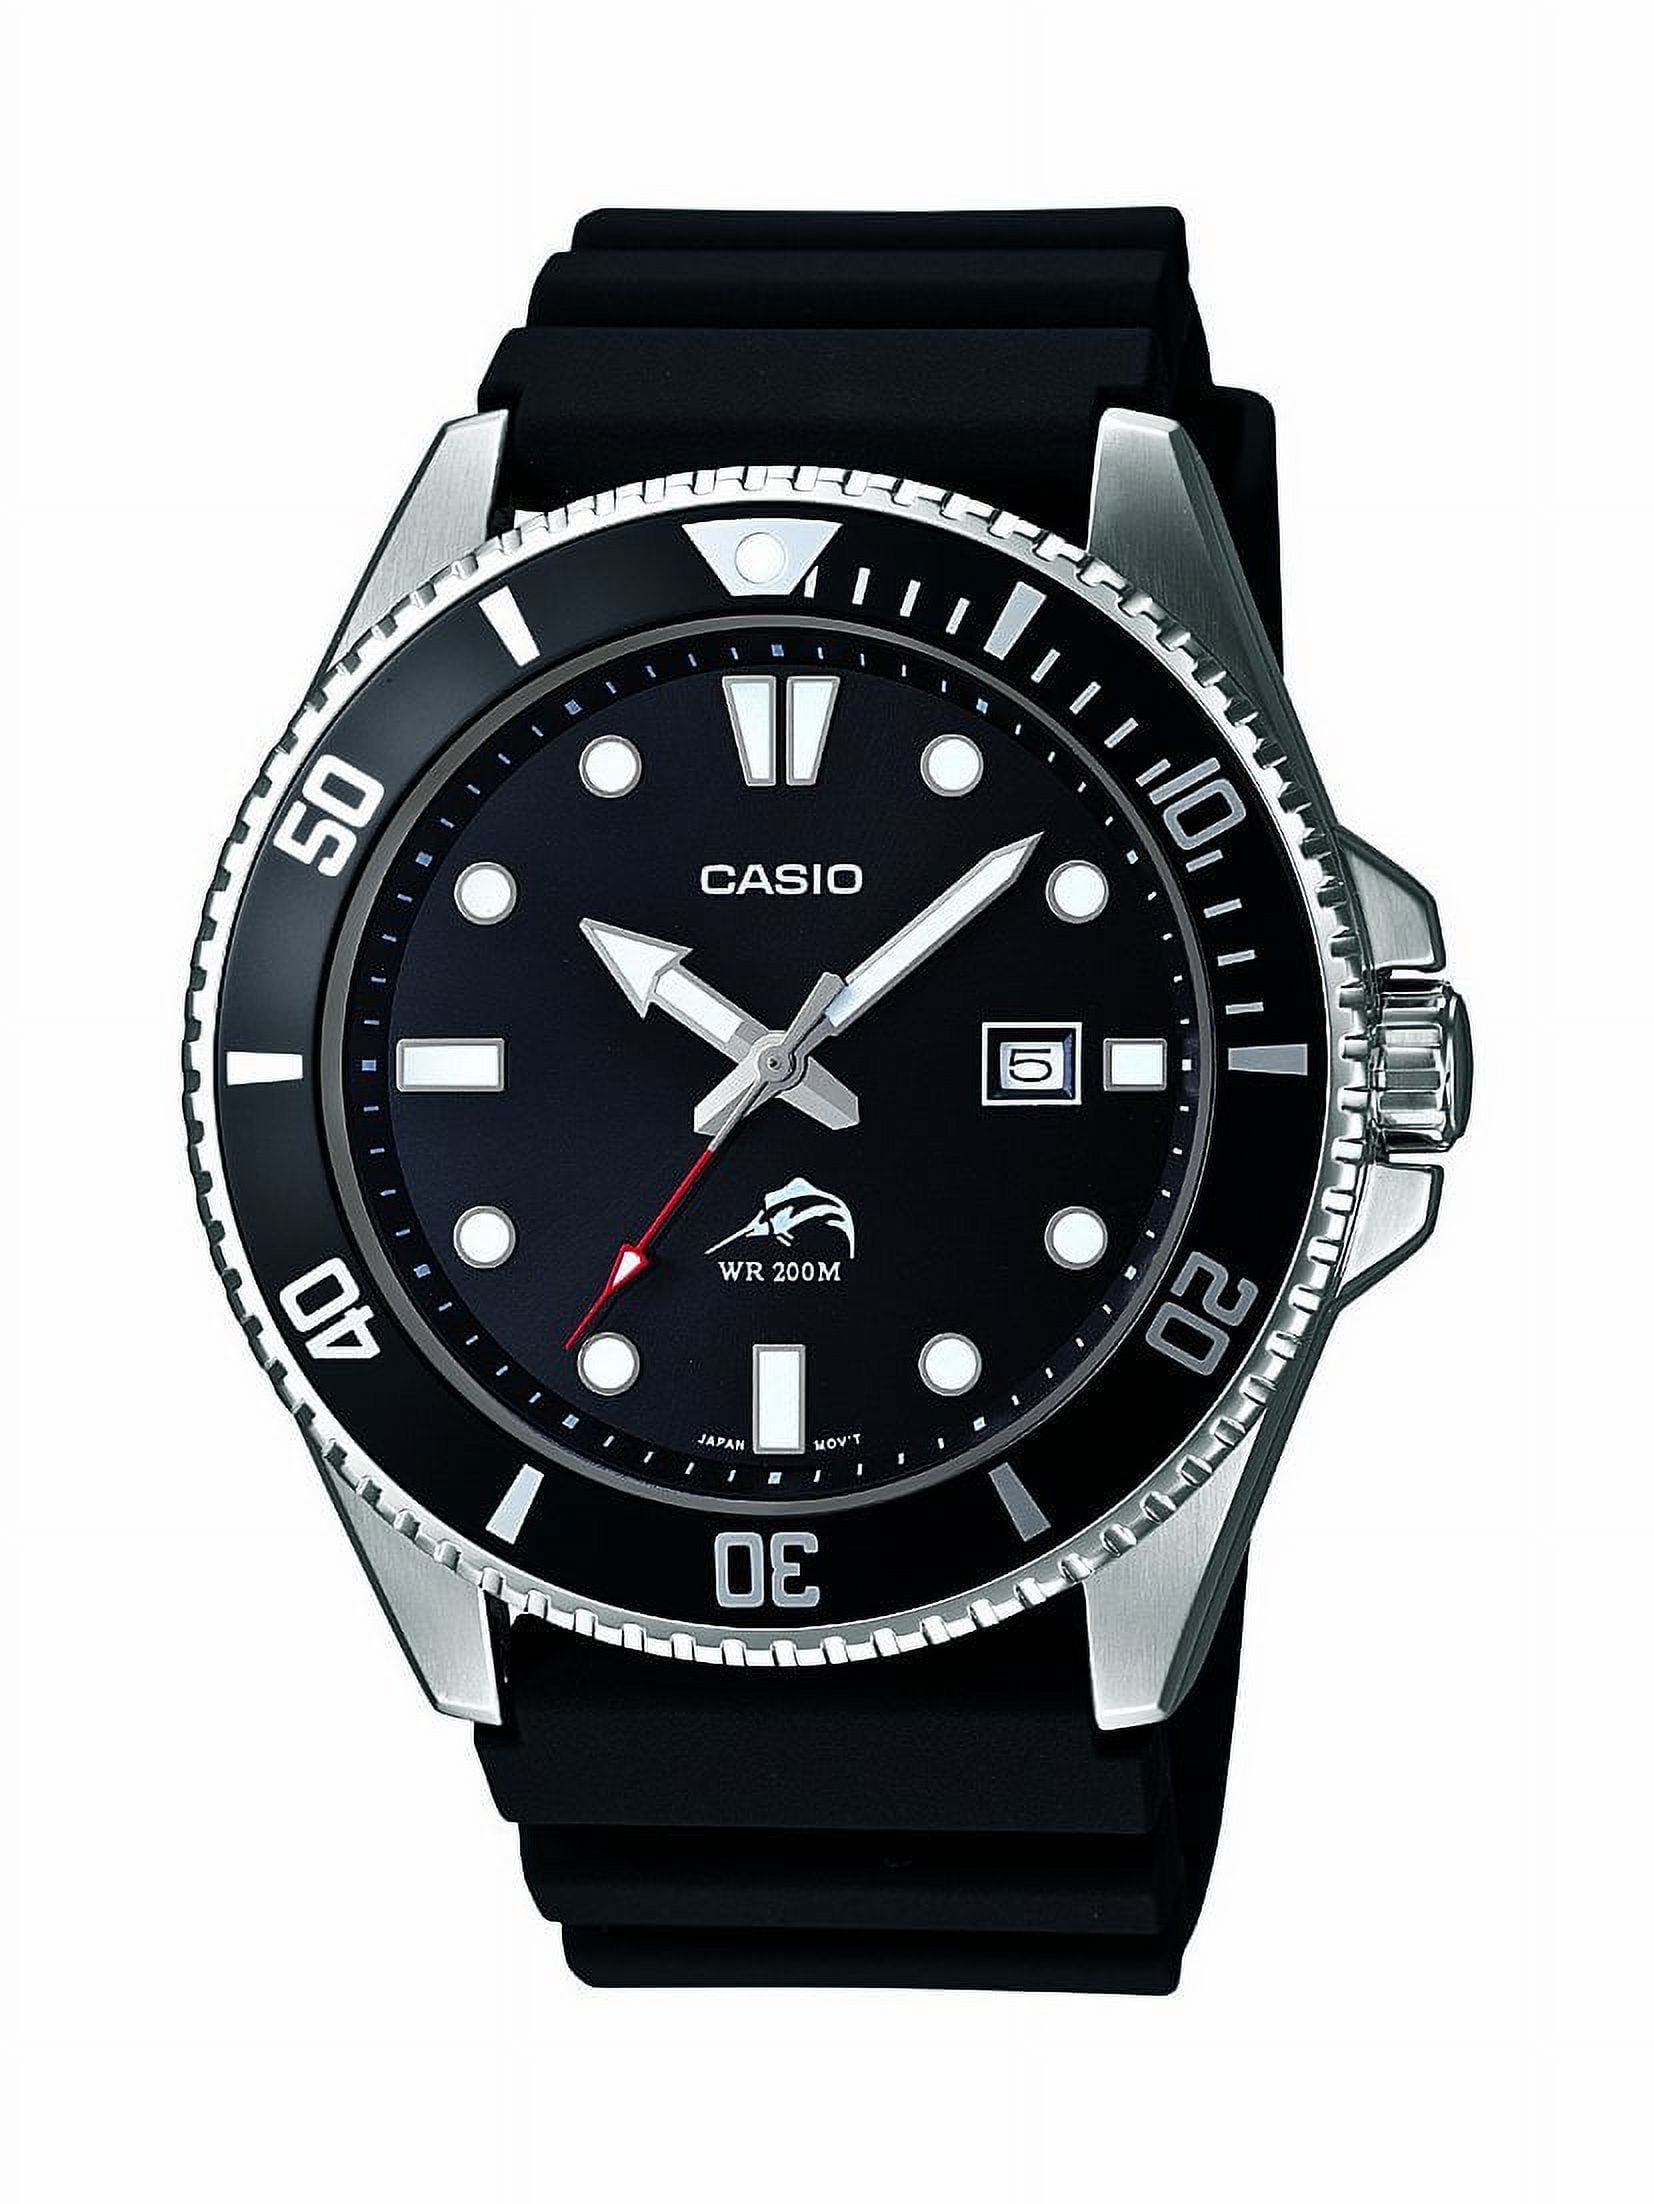 Casio Men's Dive-Style Sport Watch